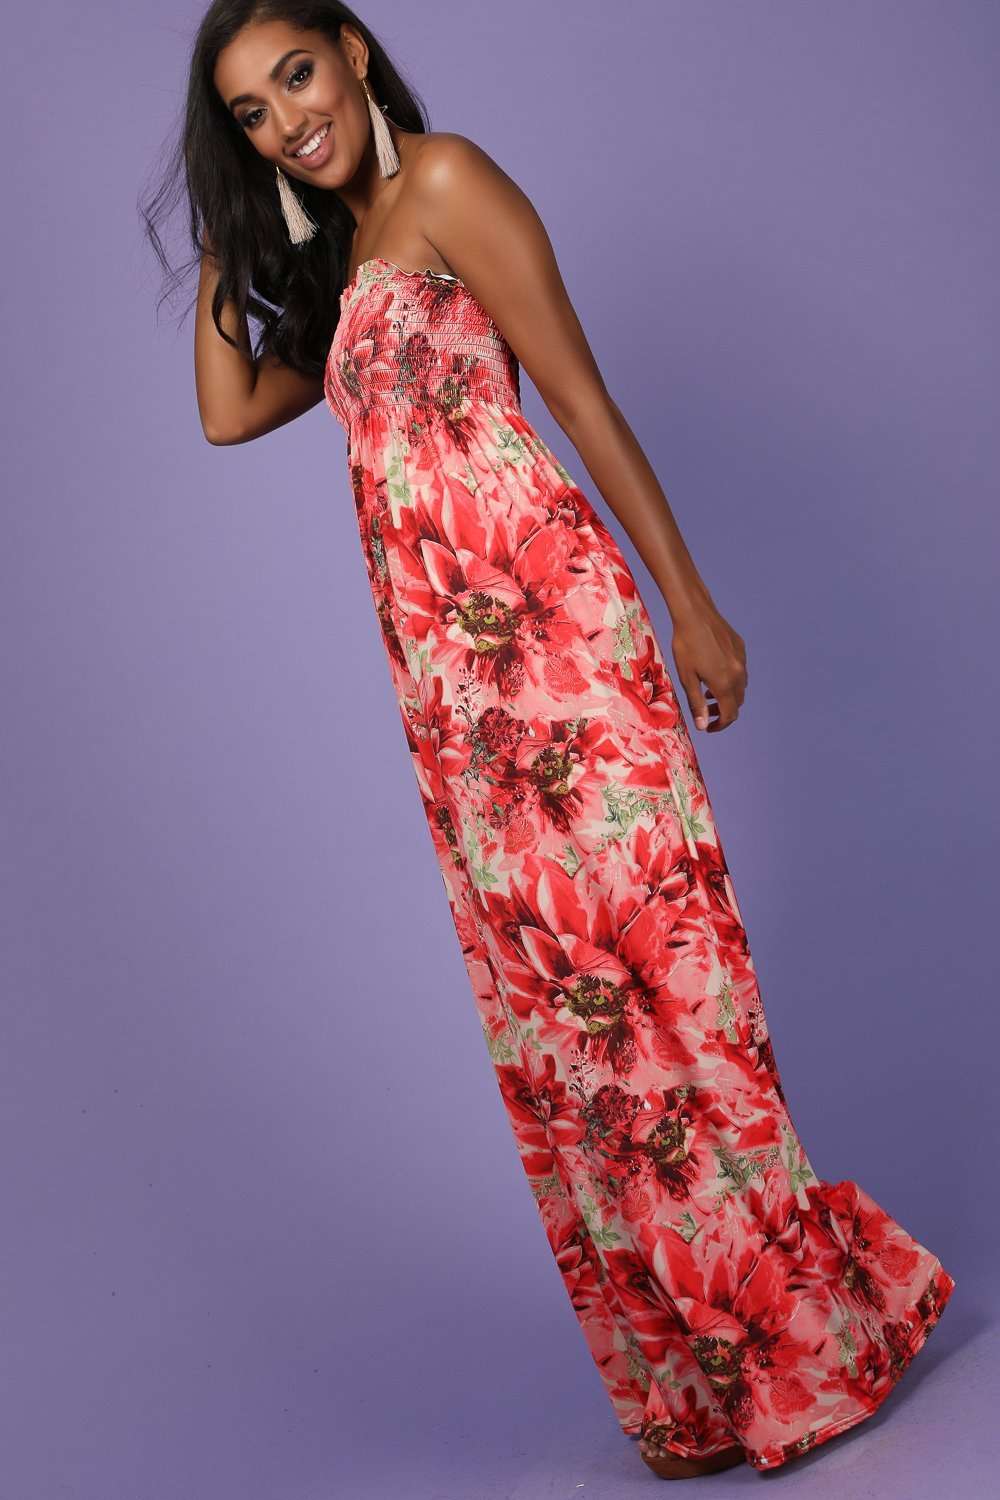 Alli Sheering Bardot Red Floral Maxi Dress - bejealous-com